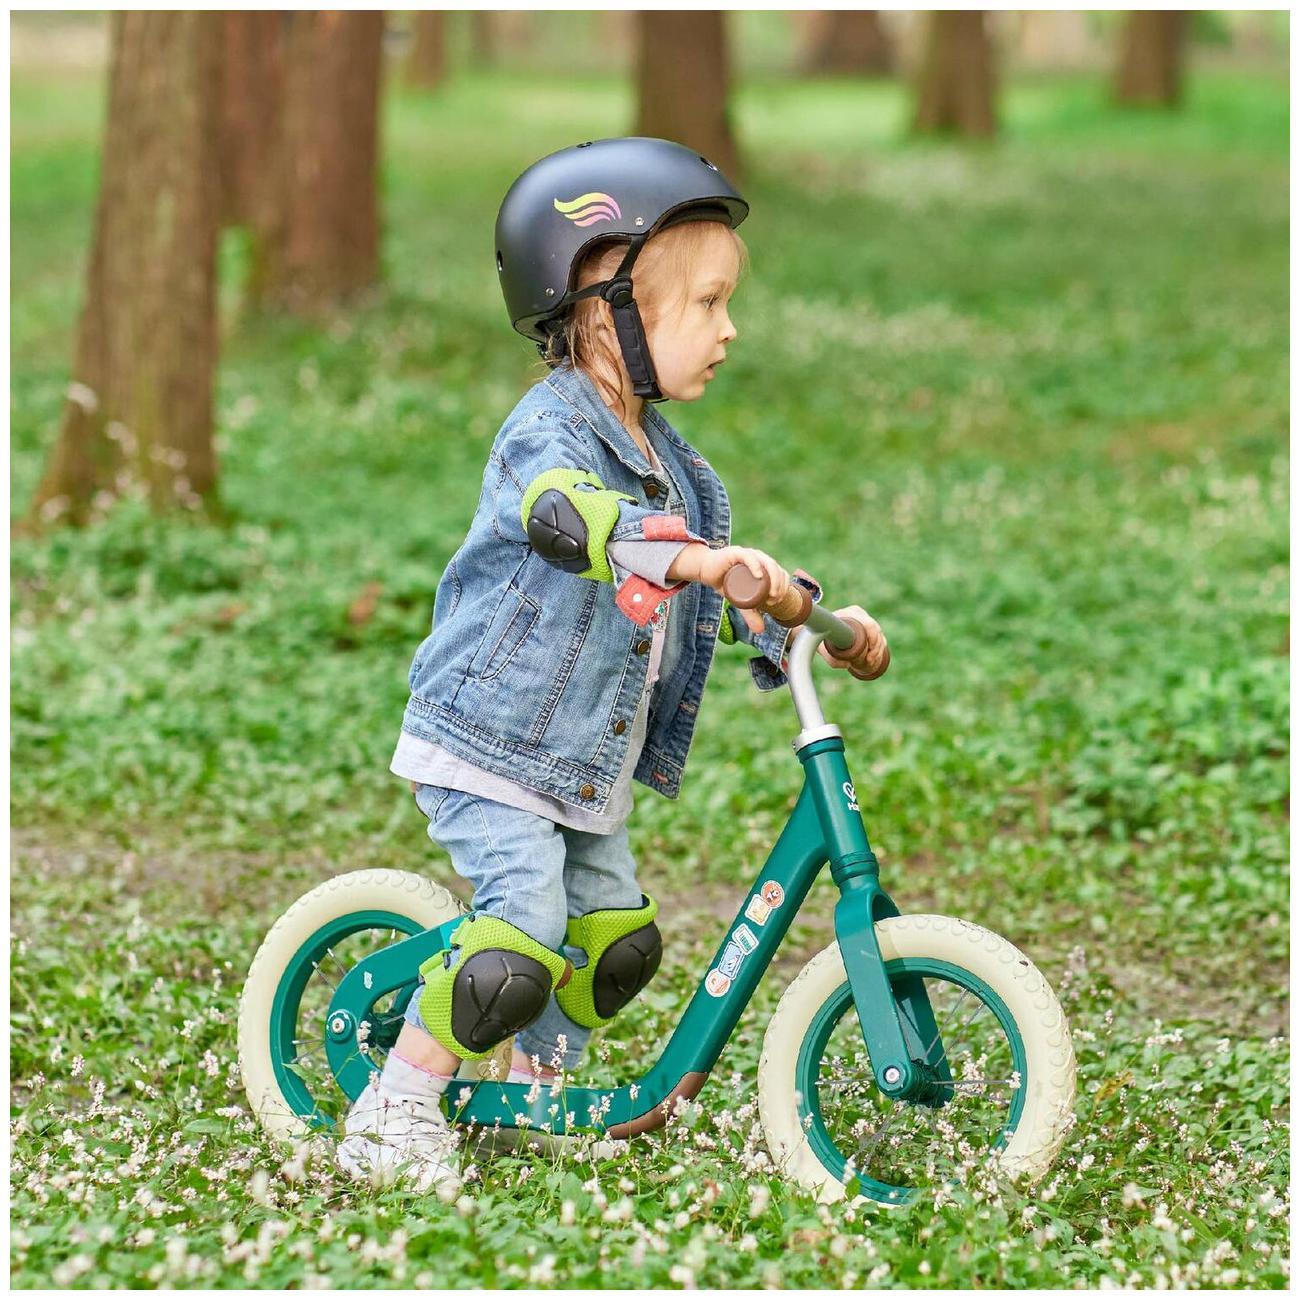 Hape Learn to Ride Balance Bike Green